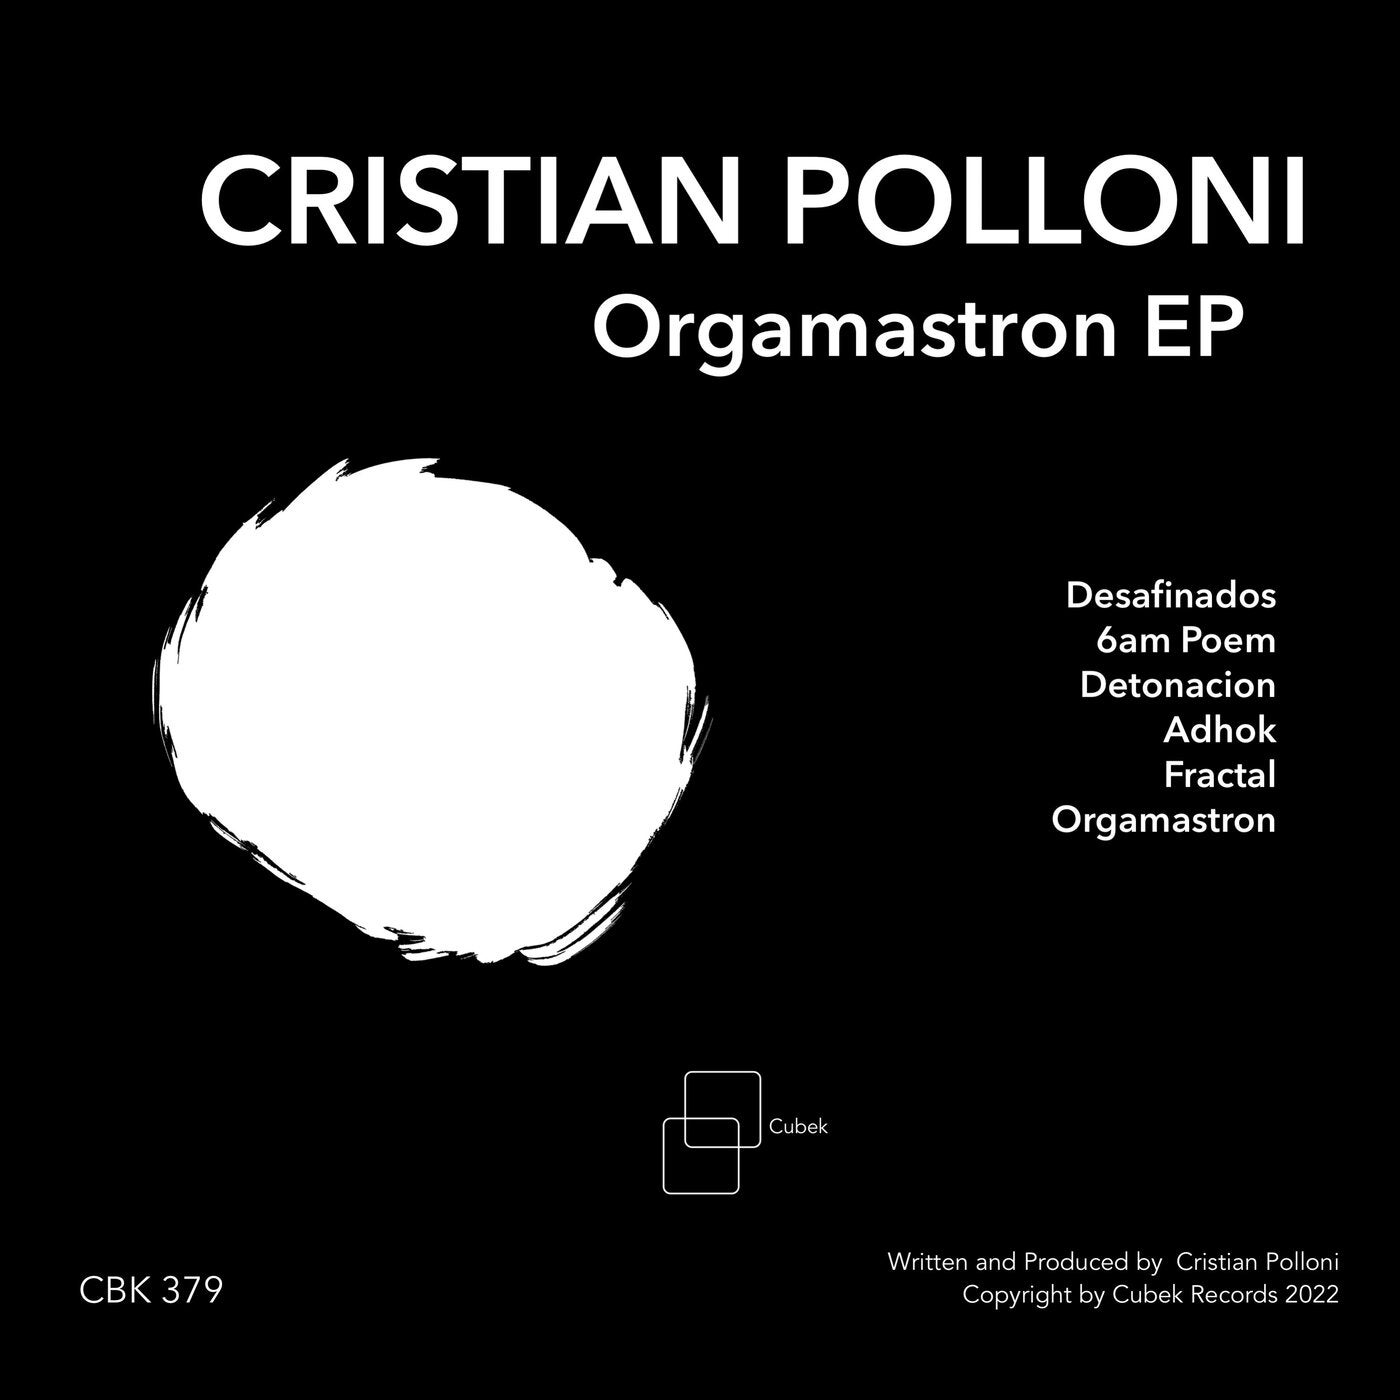 Orgamastron EP